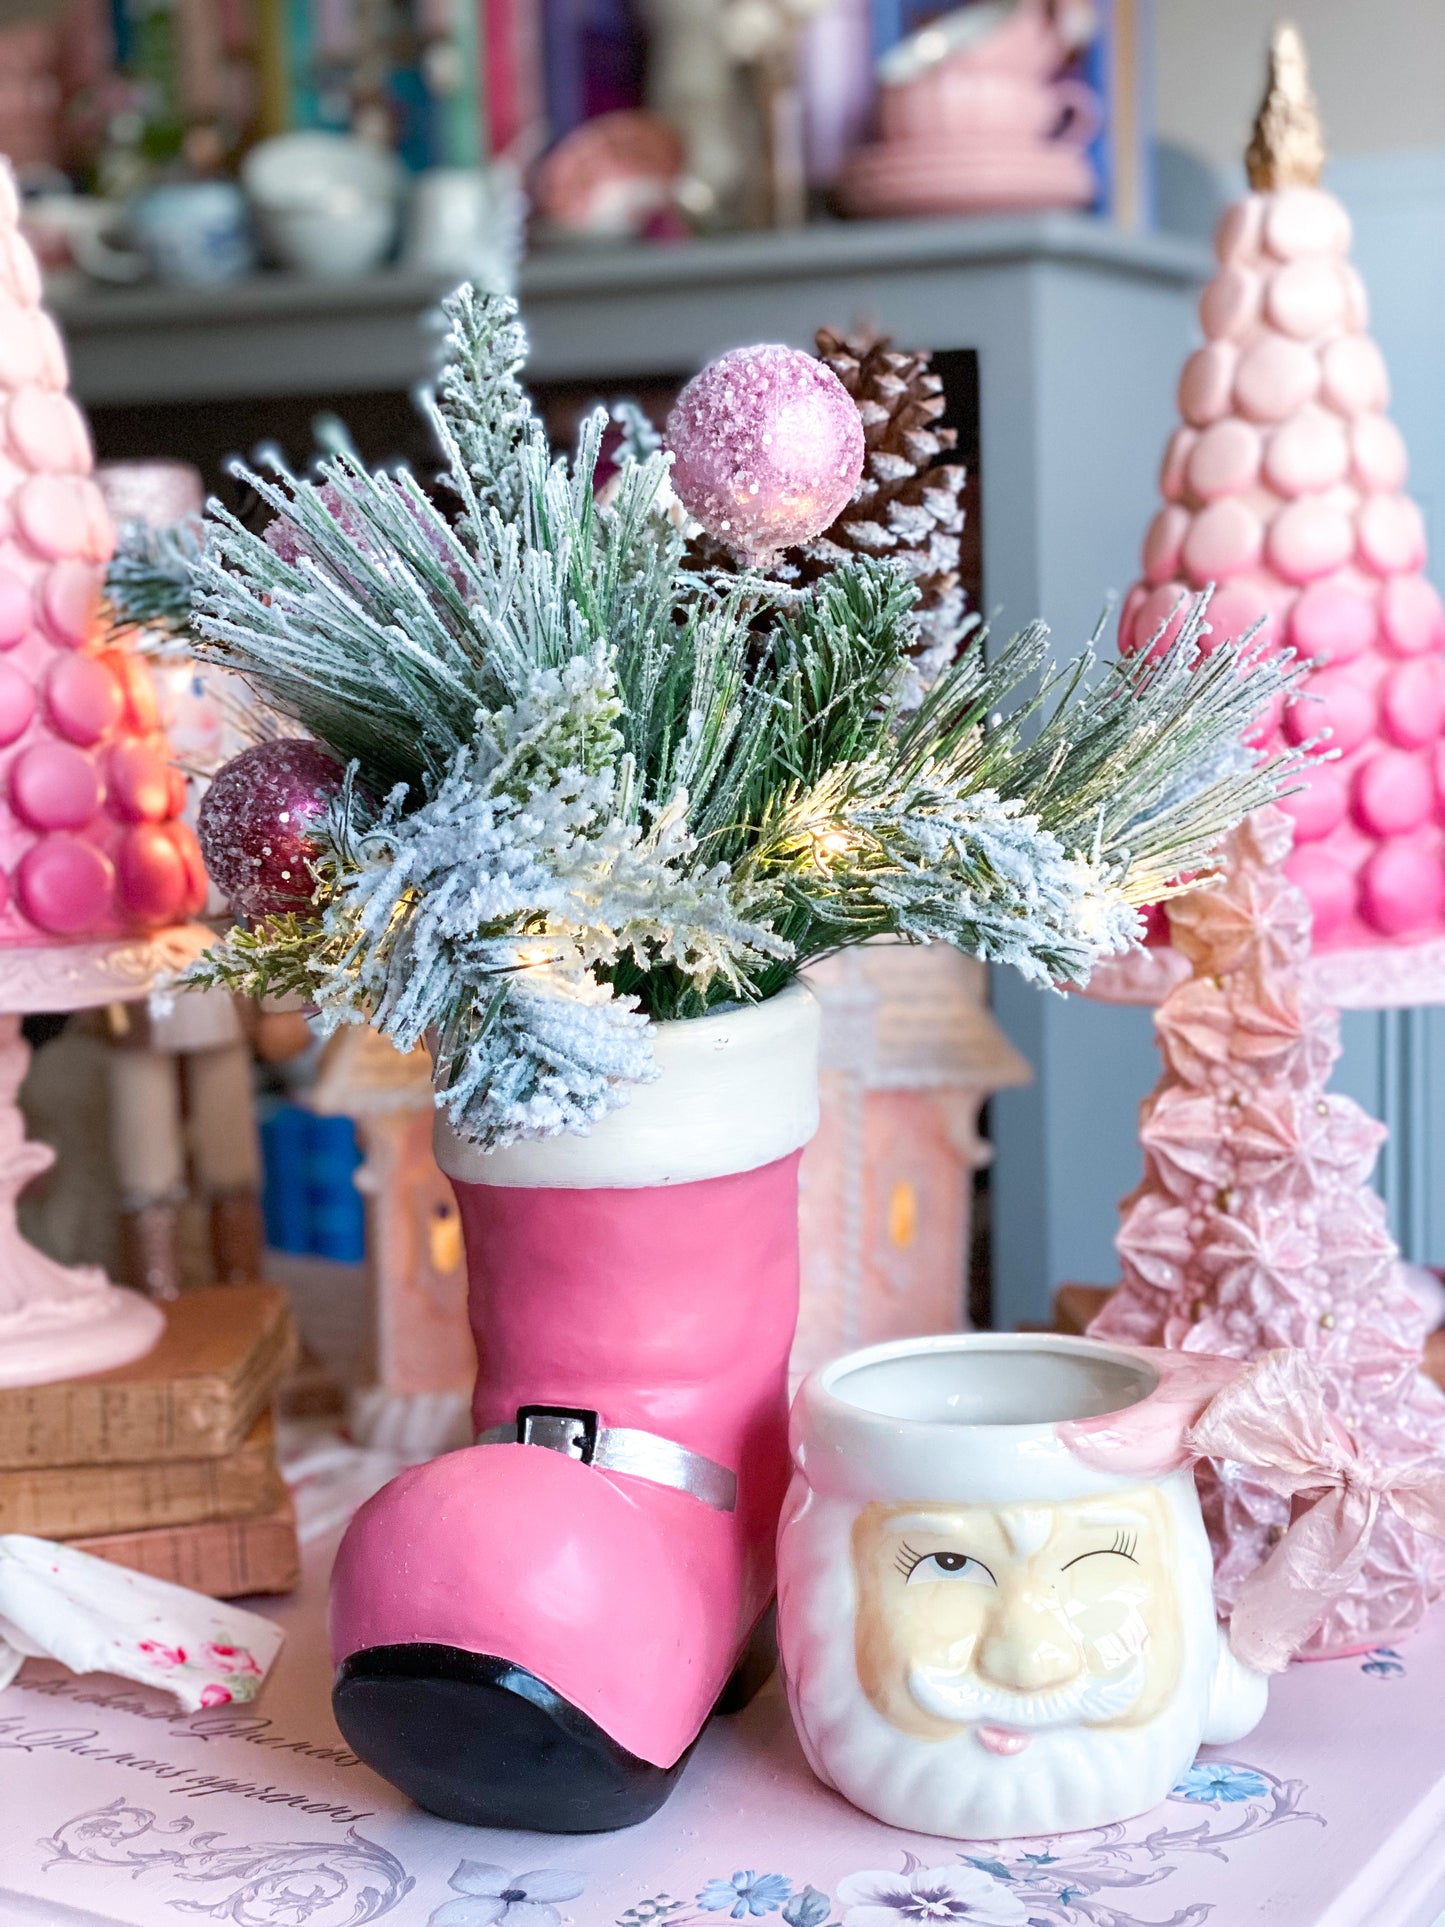 LED light up pink Santa boot